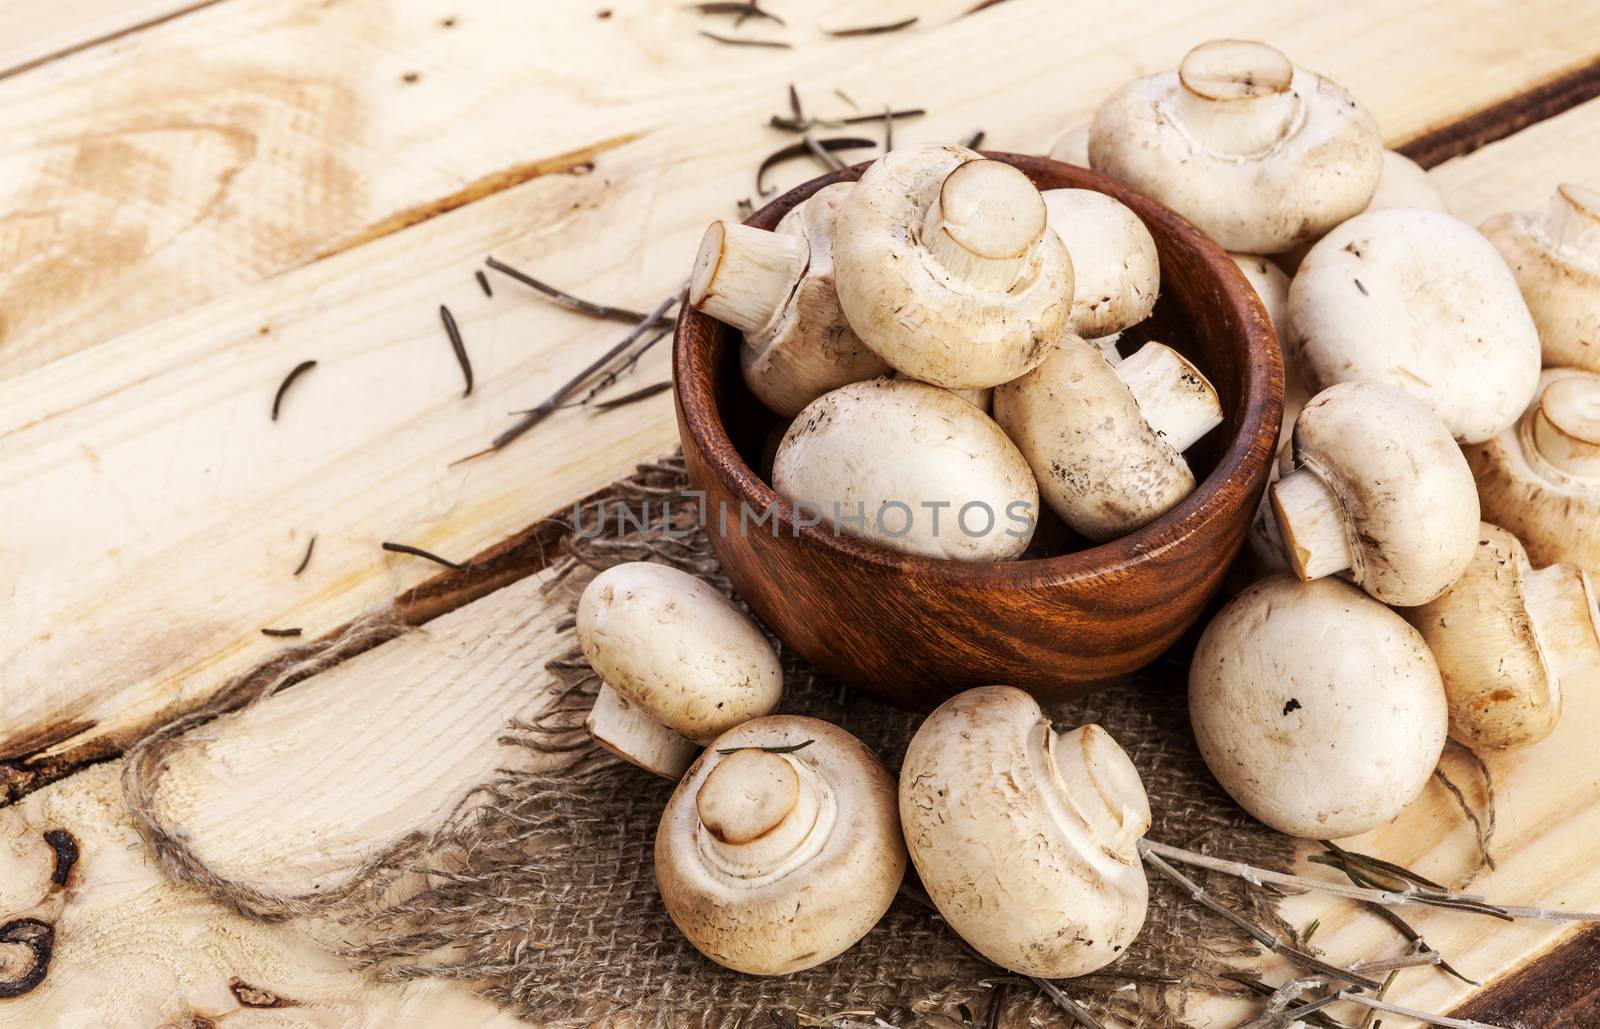 Fresh champignon mushrooms on wooden table. Copy space by xamtiw